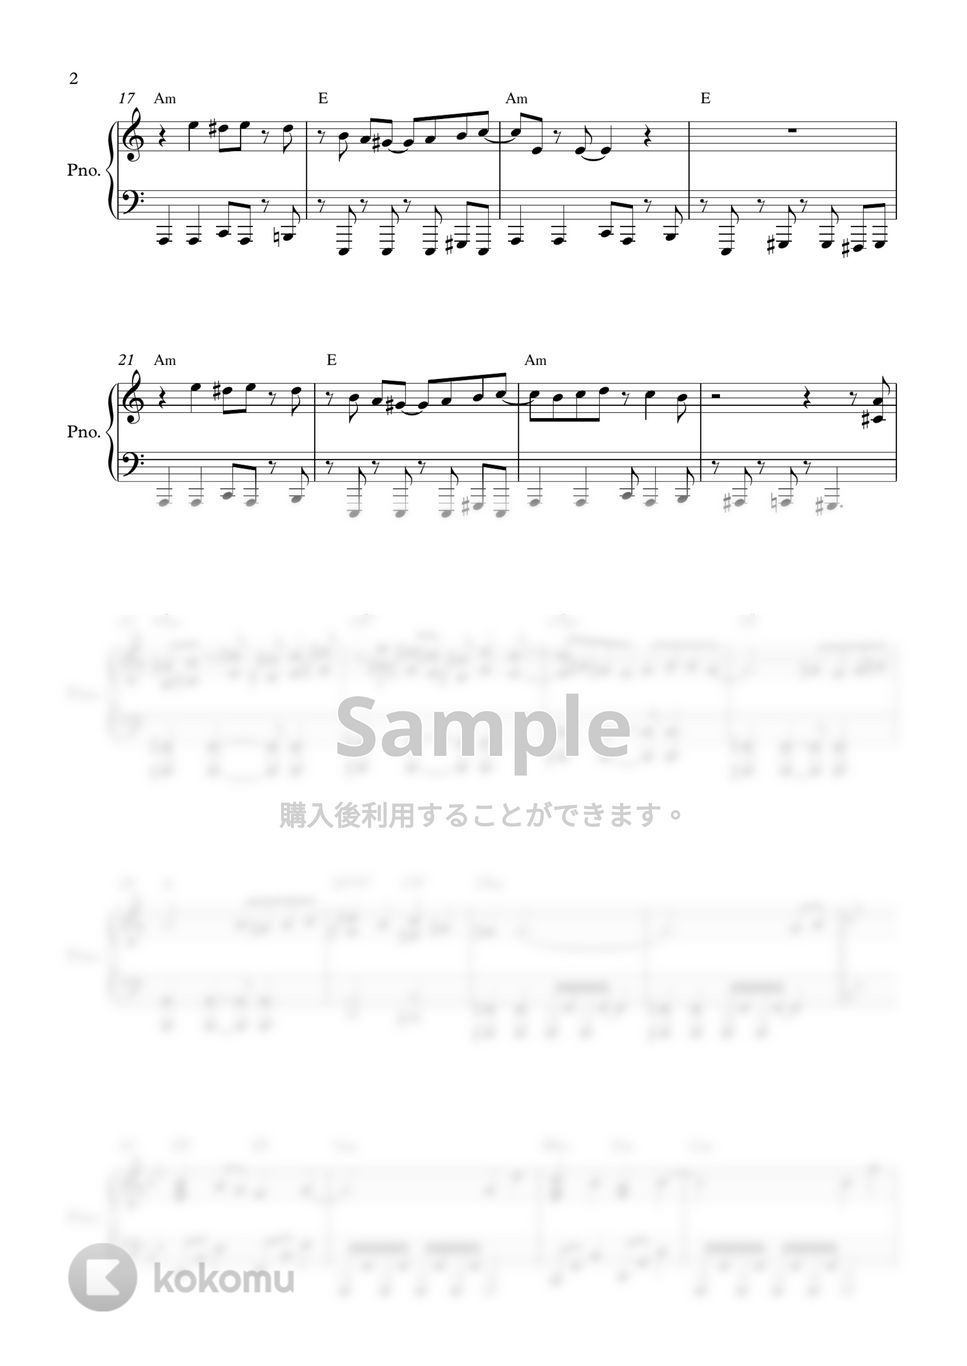 米津玄師 - KICK BACK (Easy ver.) by PIANOiNU